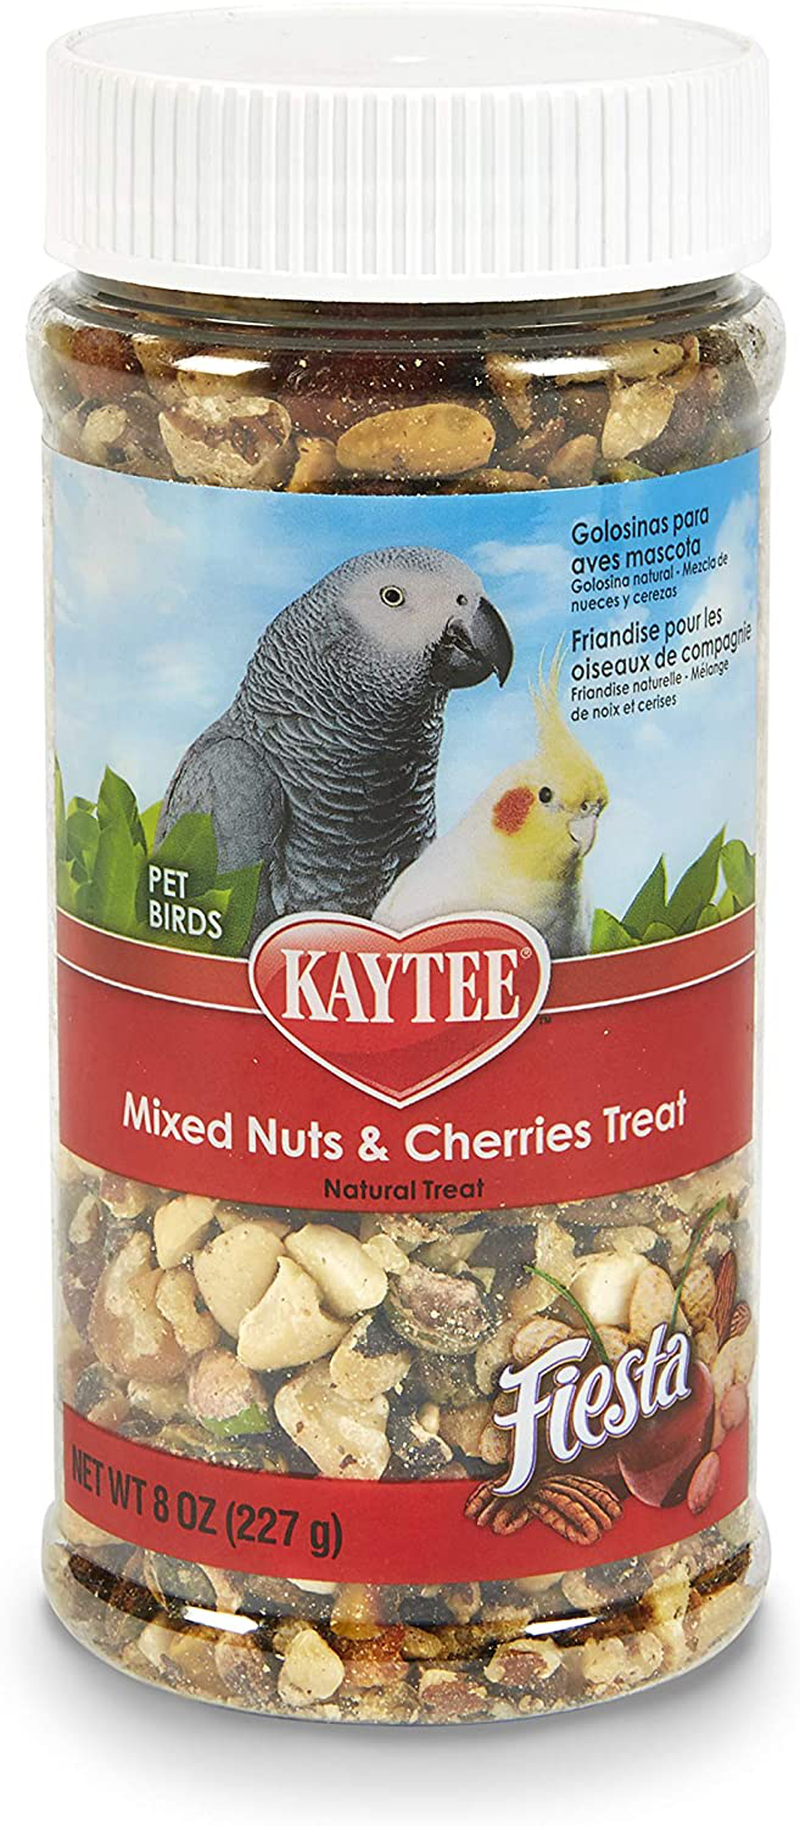 Kaytee Fiesta Mixed Nuts and Cherries Treat for Pet Birds, 8-Oz Jar